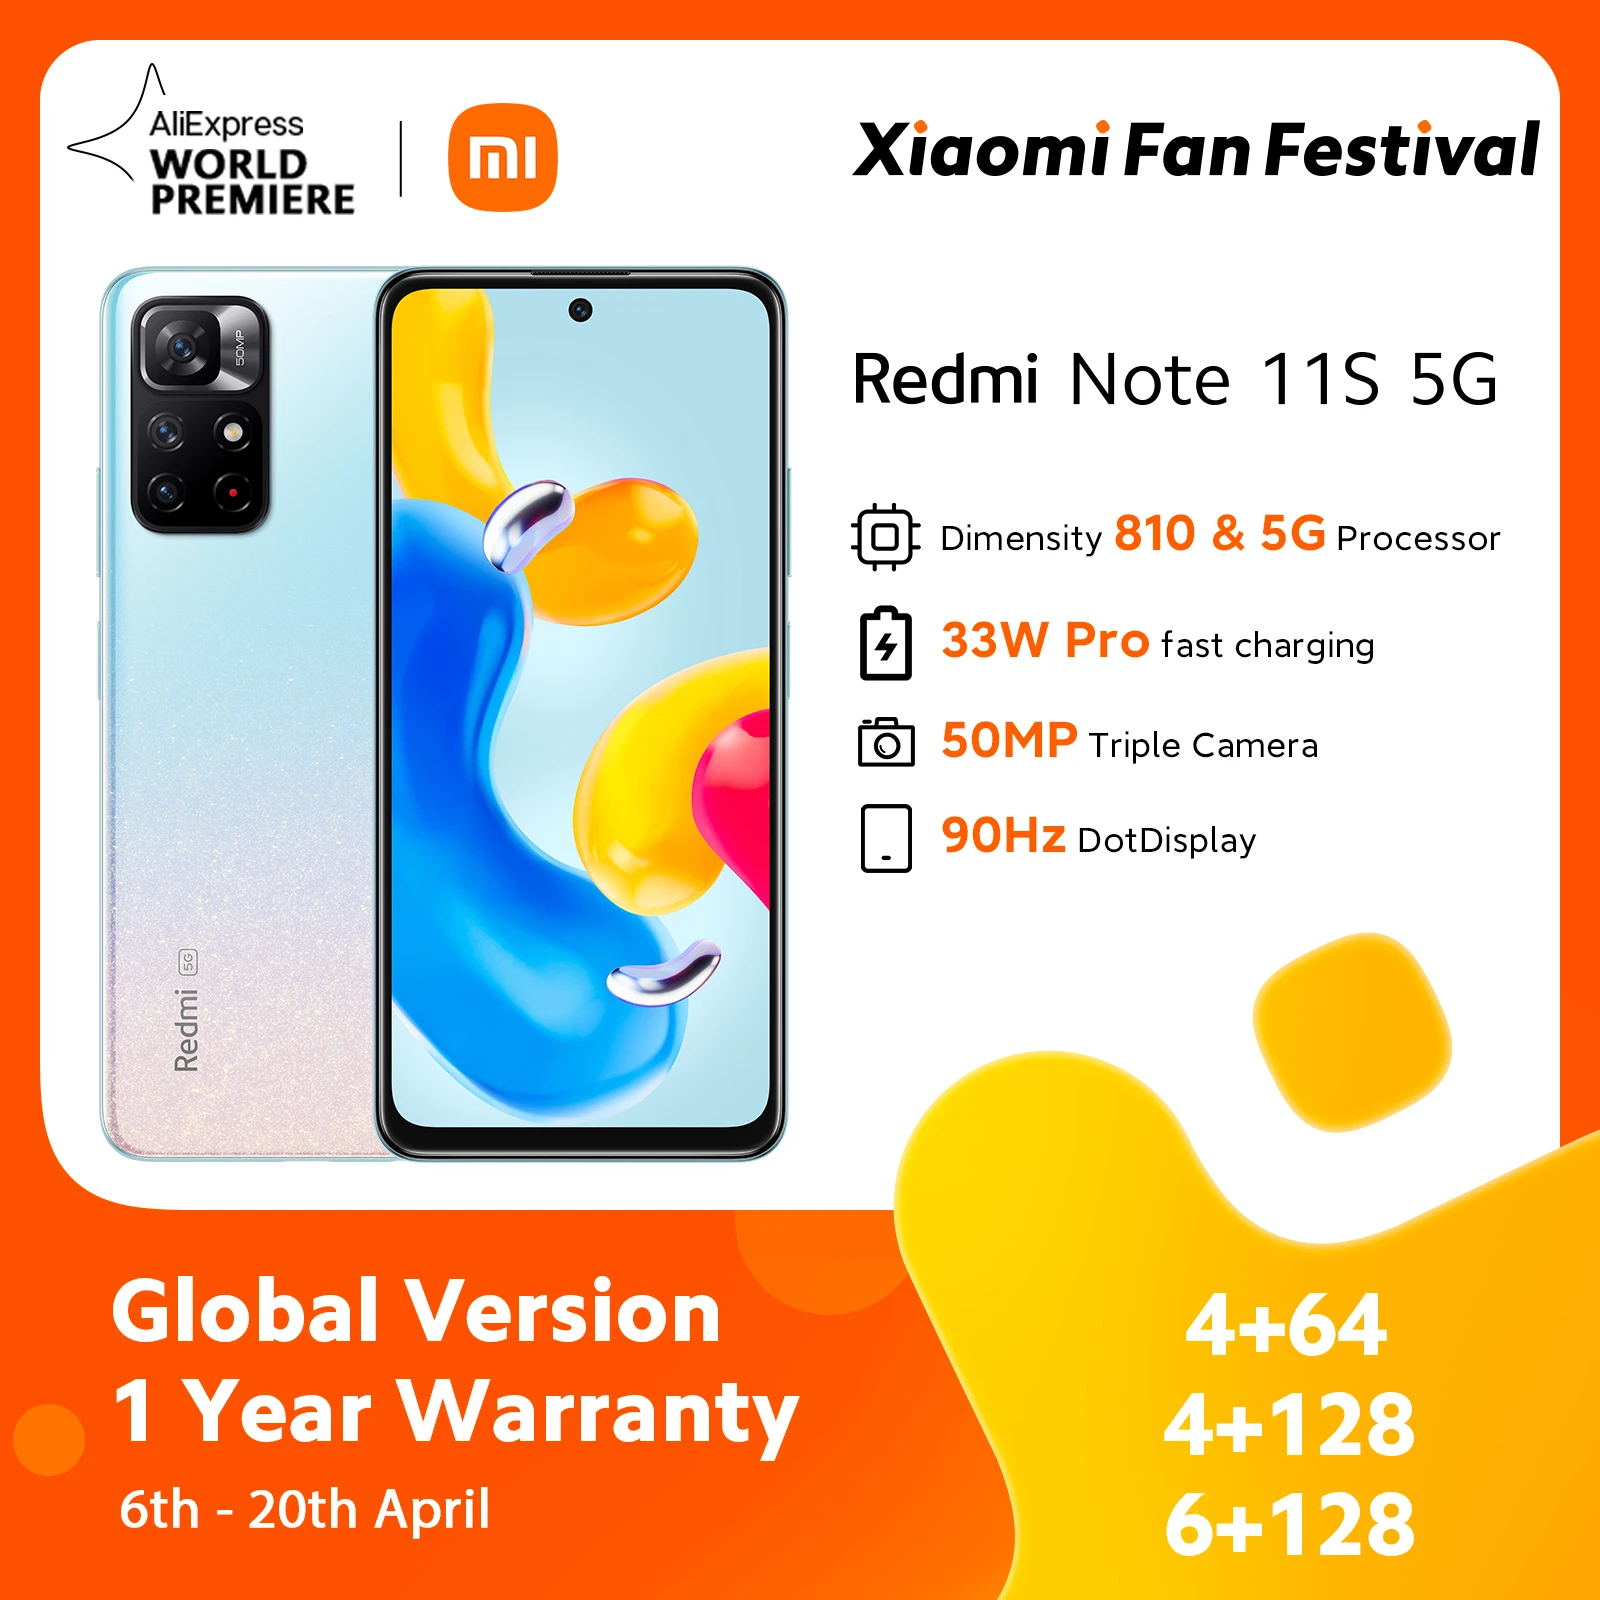 doorbell screen intercom 【World Premiere】Global Version Xiaomi Redmi Note 11S 5G Smartphone Dimensity 810 NFC 33W Pro Fast Charging 50MP AI Triple Camera wireless door intercom